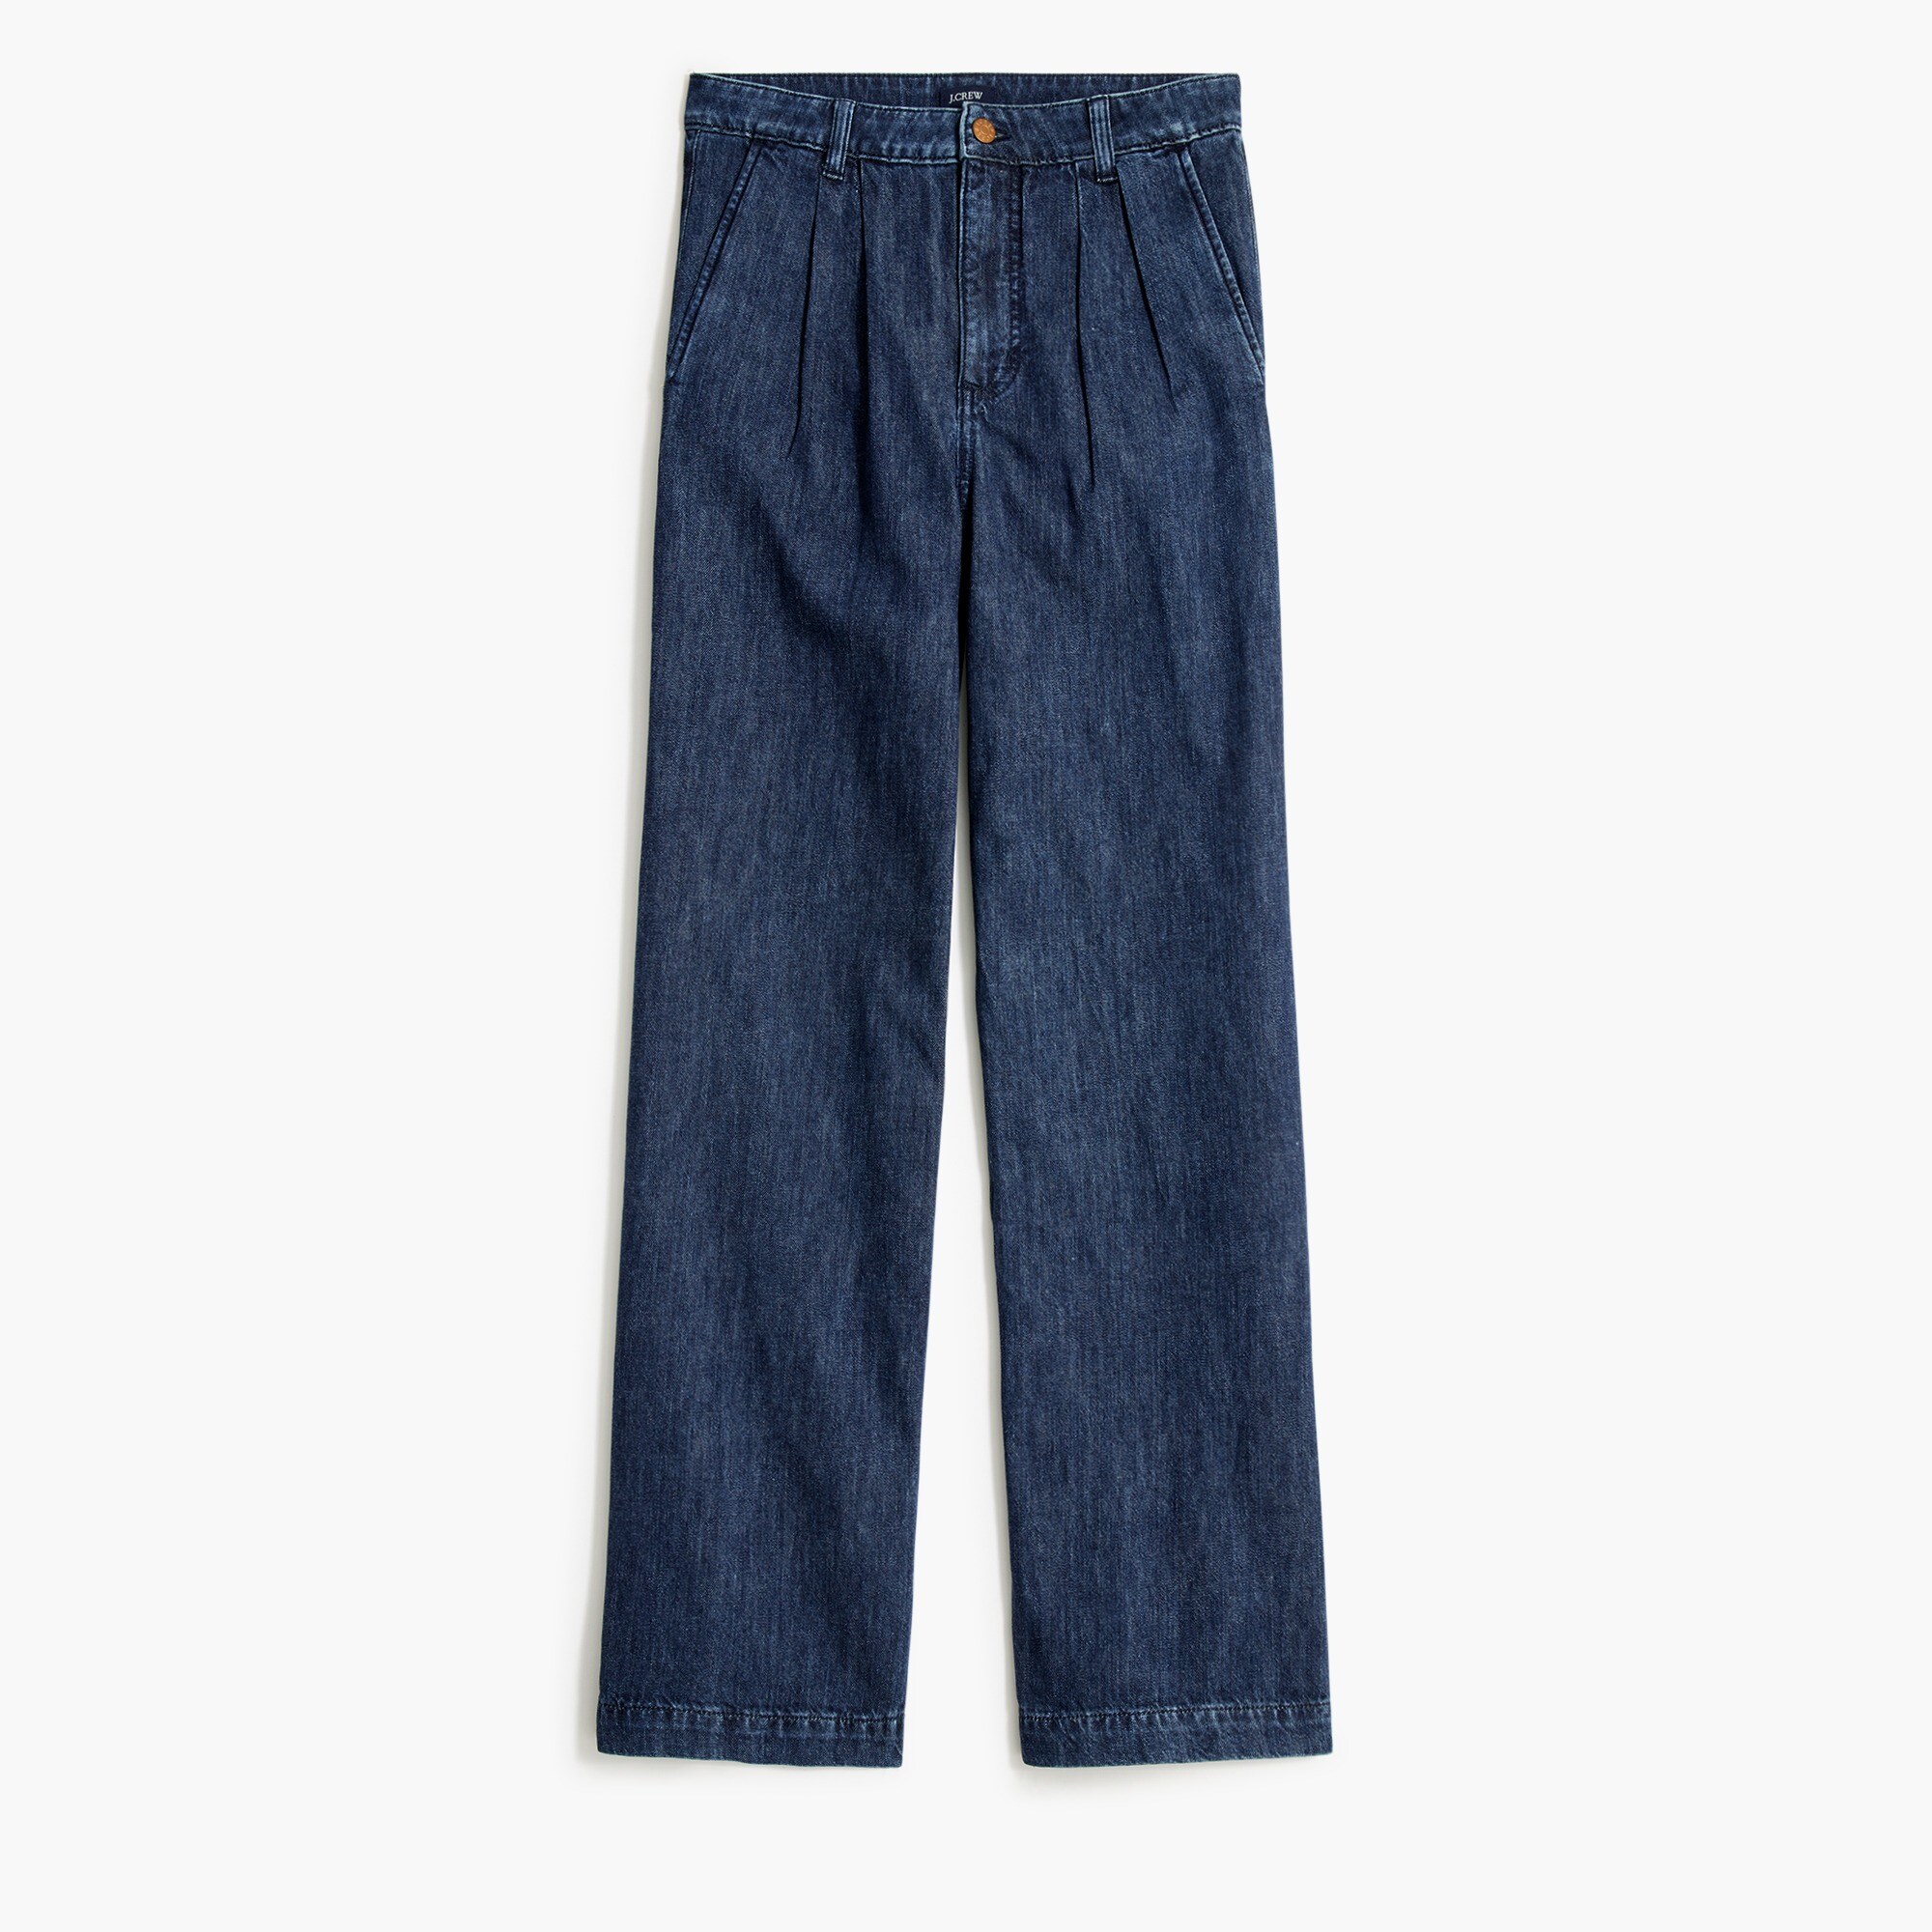  Petite pleated trouser jean